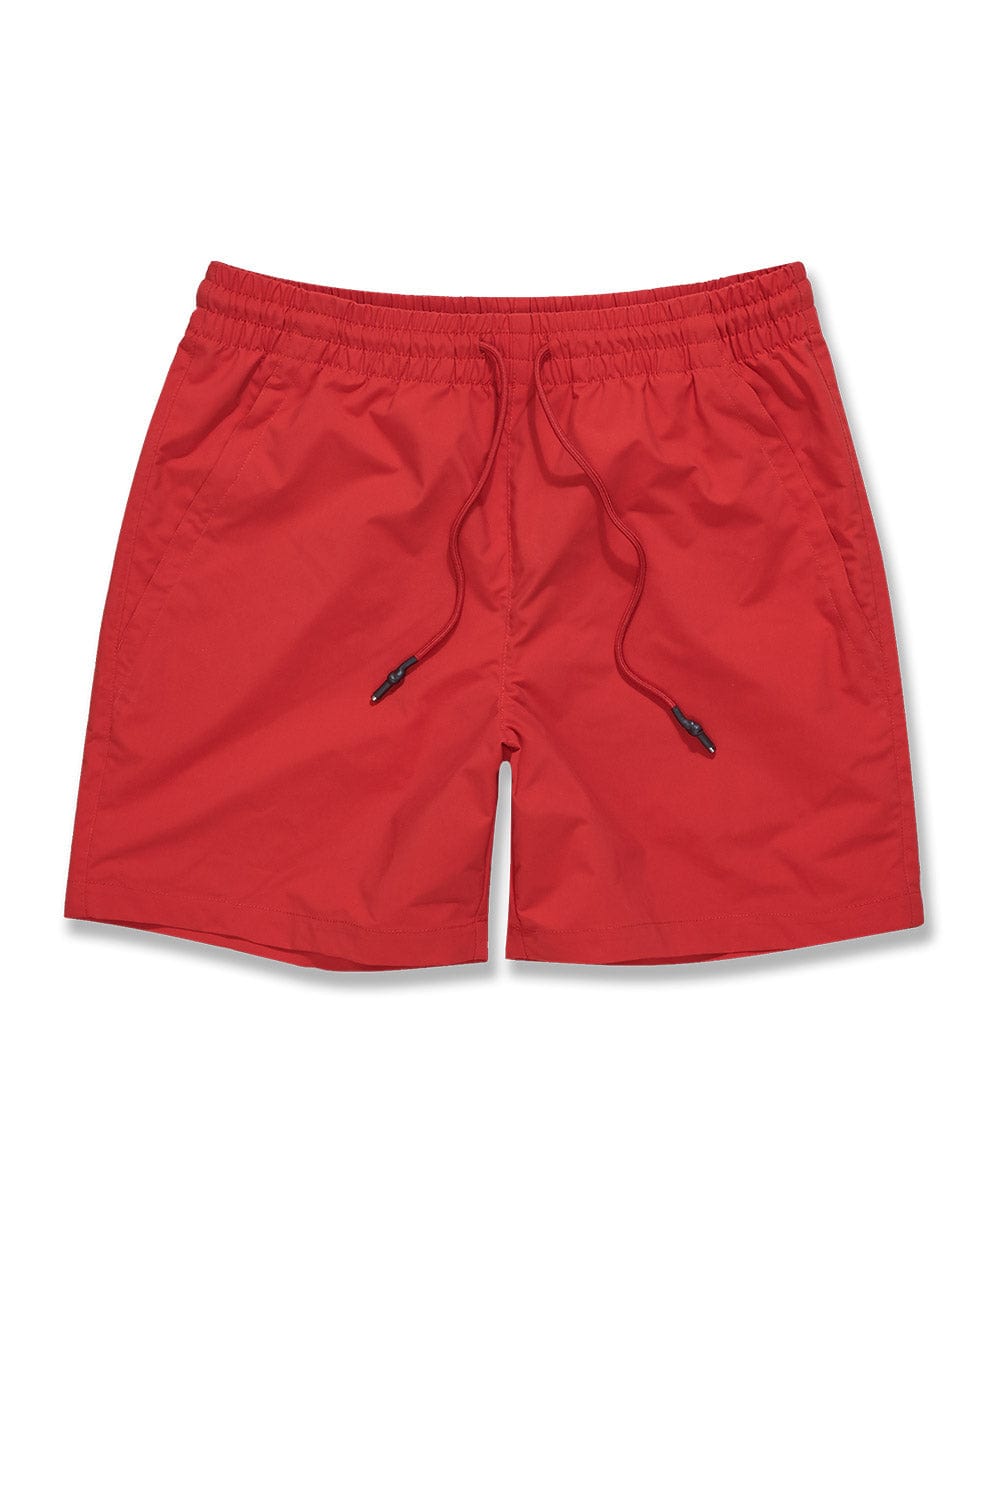 Jordan Craig Athletic - Marathon Shorts Red / S